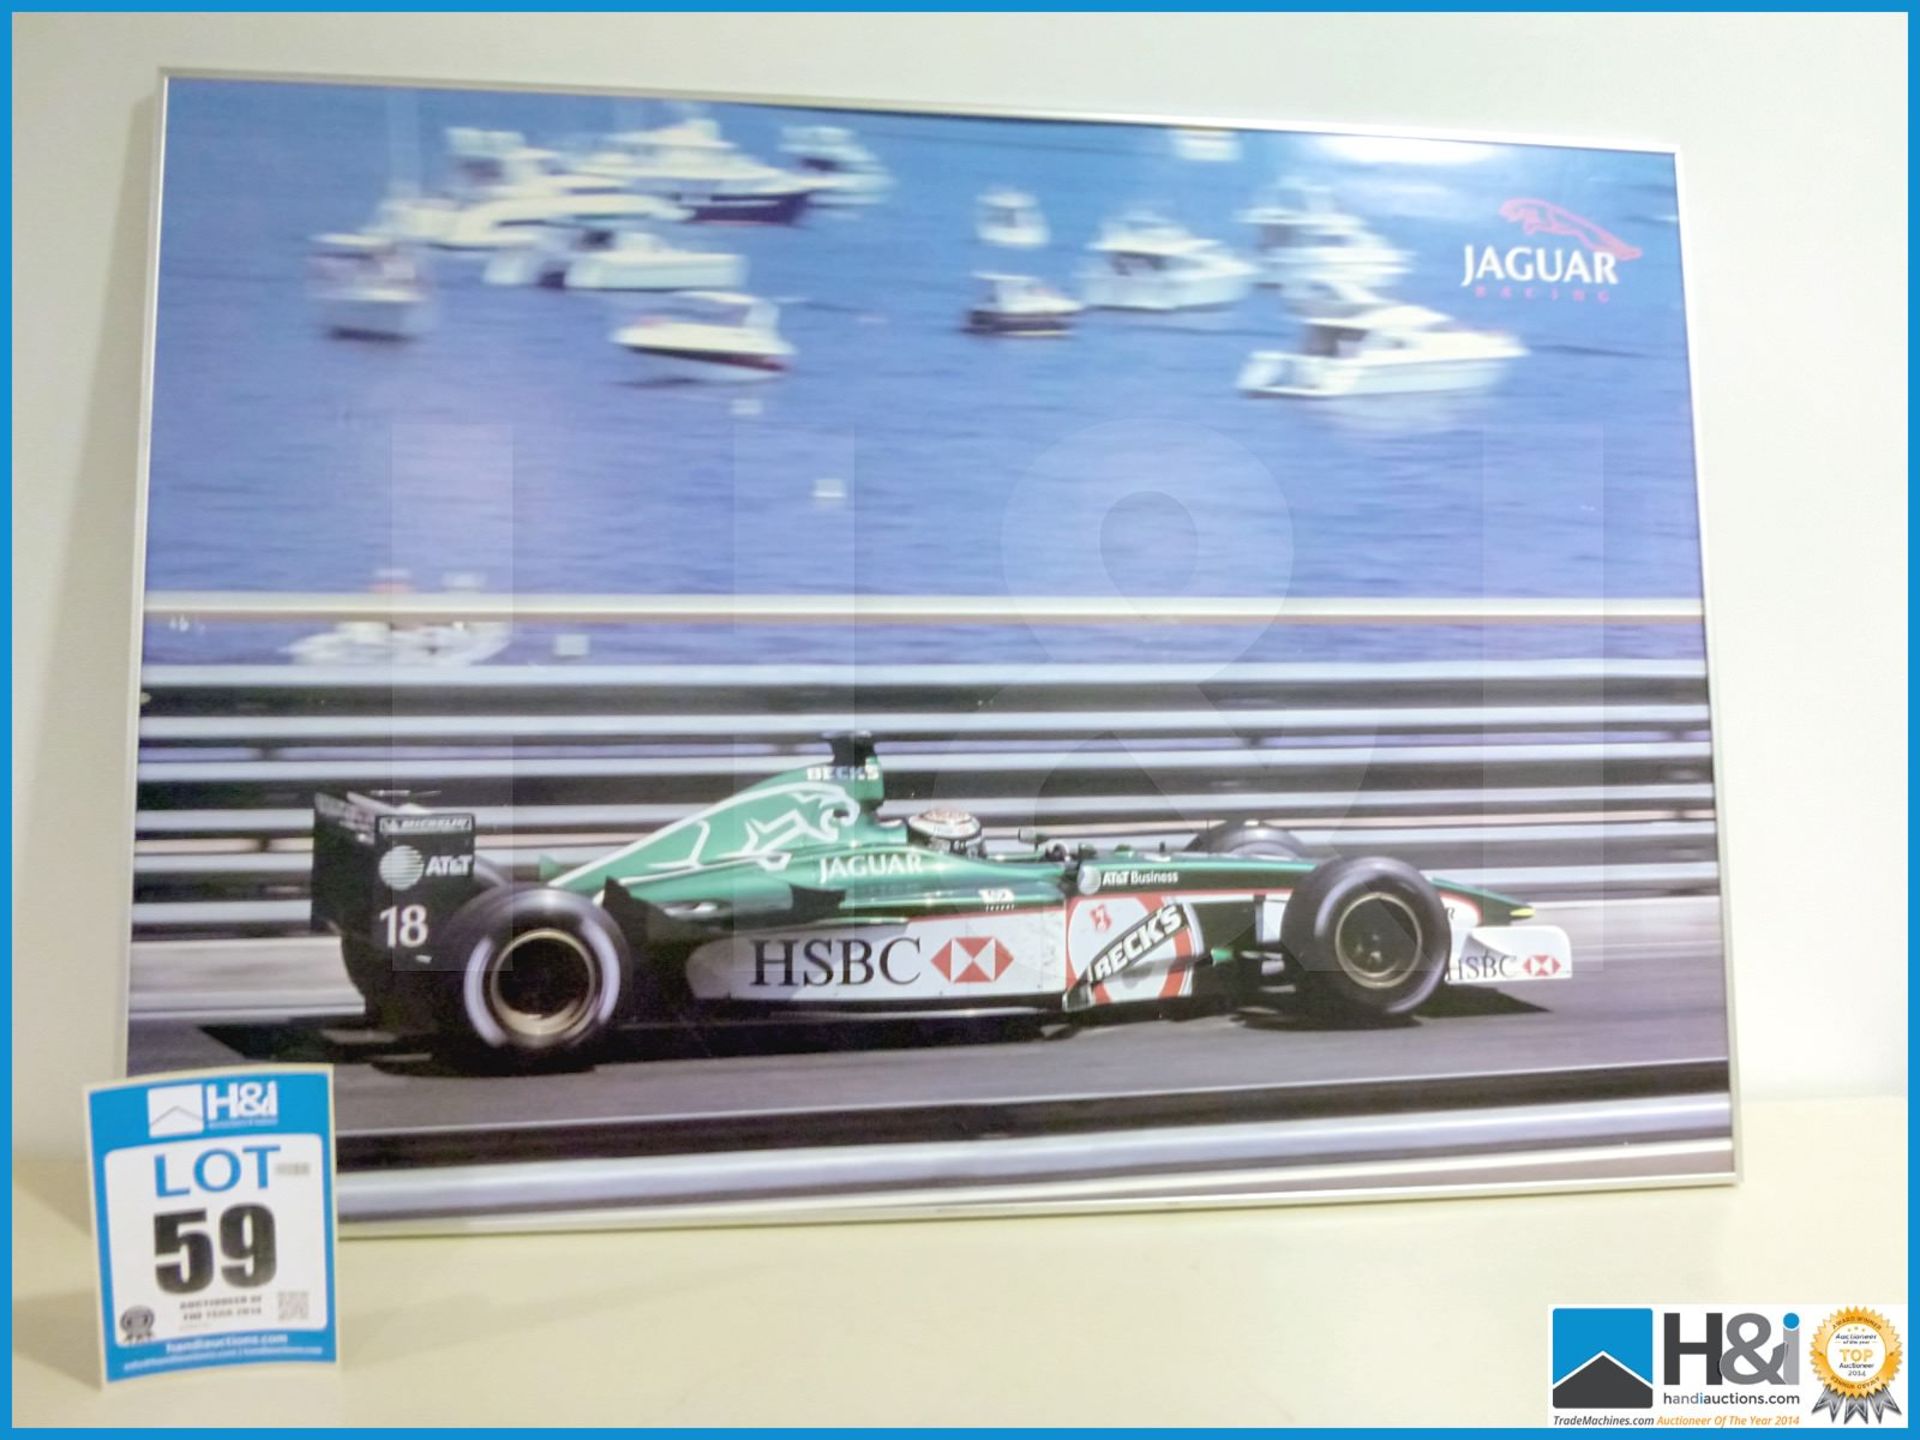 Large aluminium framed print of Jaguar F1 car, Eddy Irvine at Monaco. Appx 39in x 27in -- MC:N/A CIL